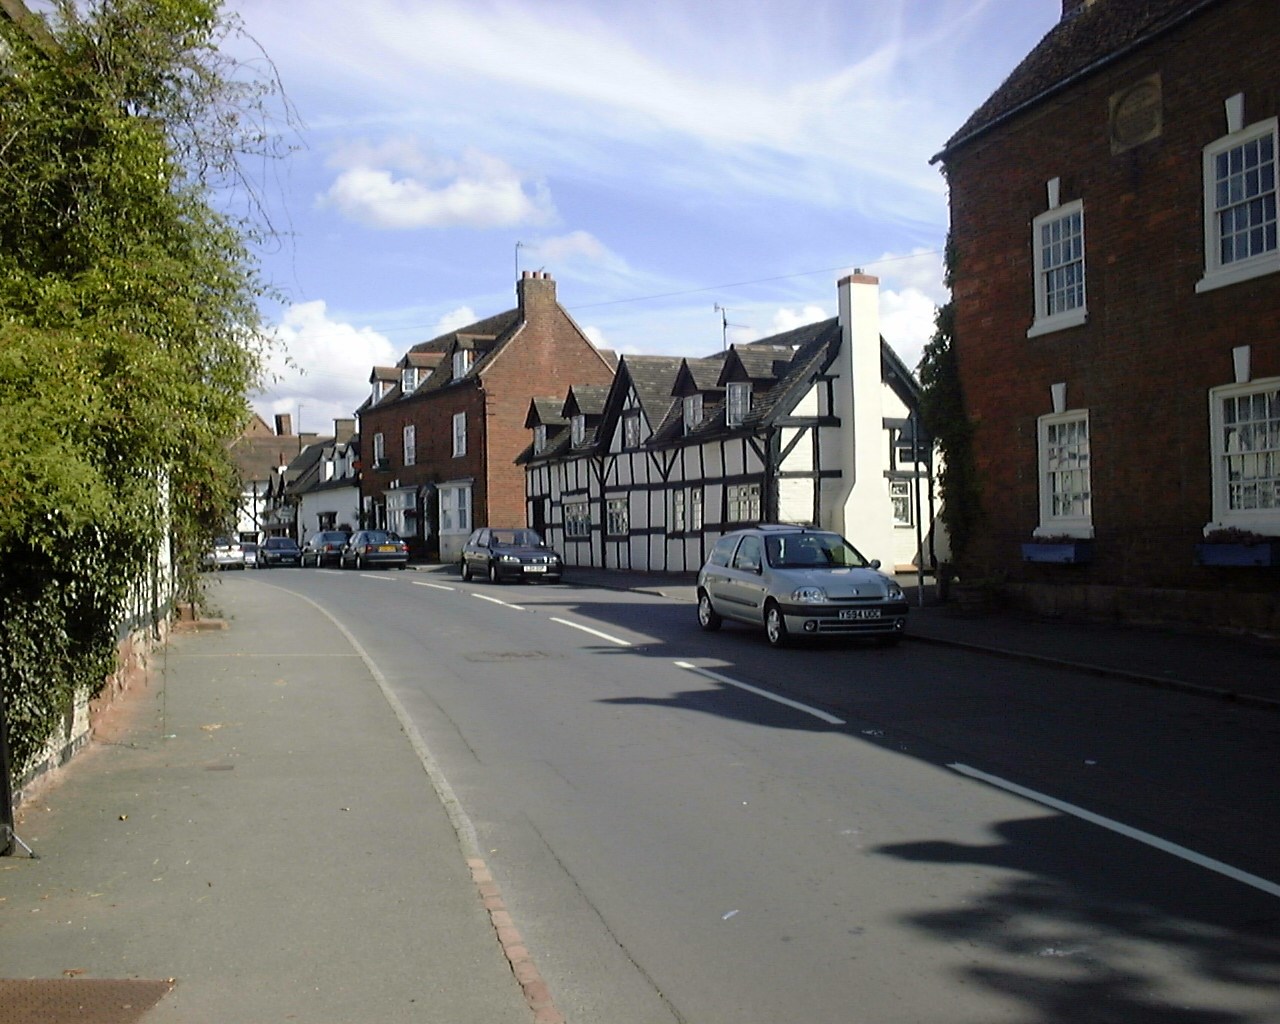 Street view of village